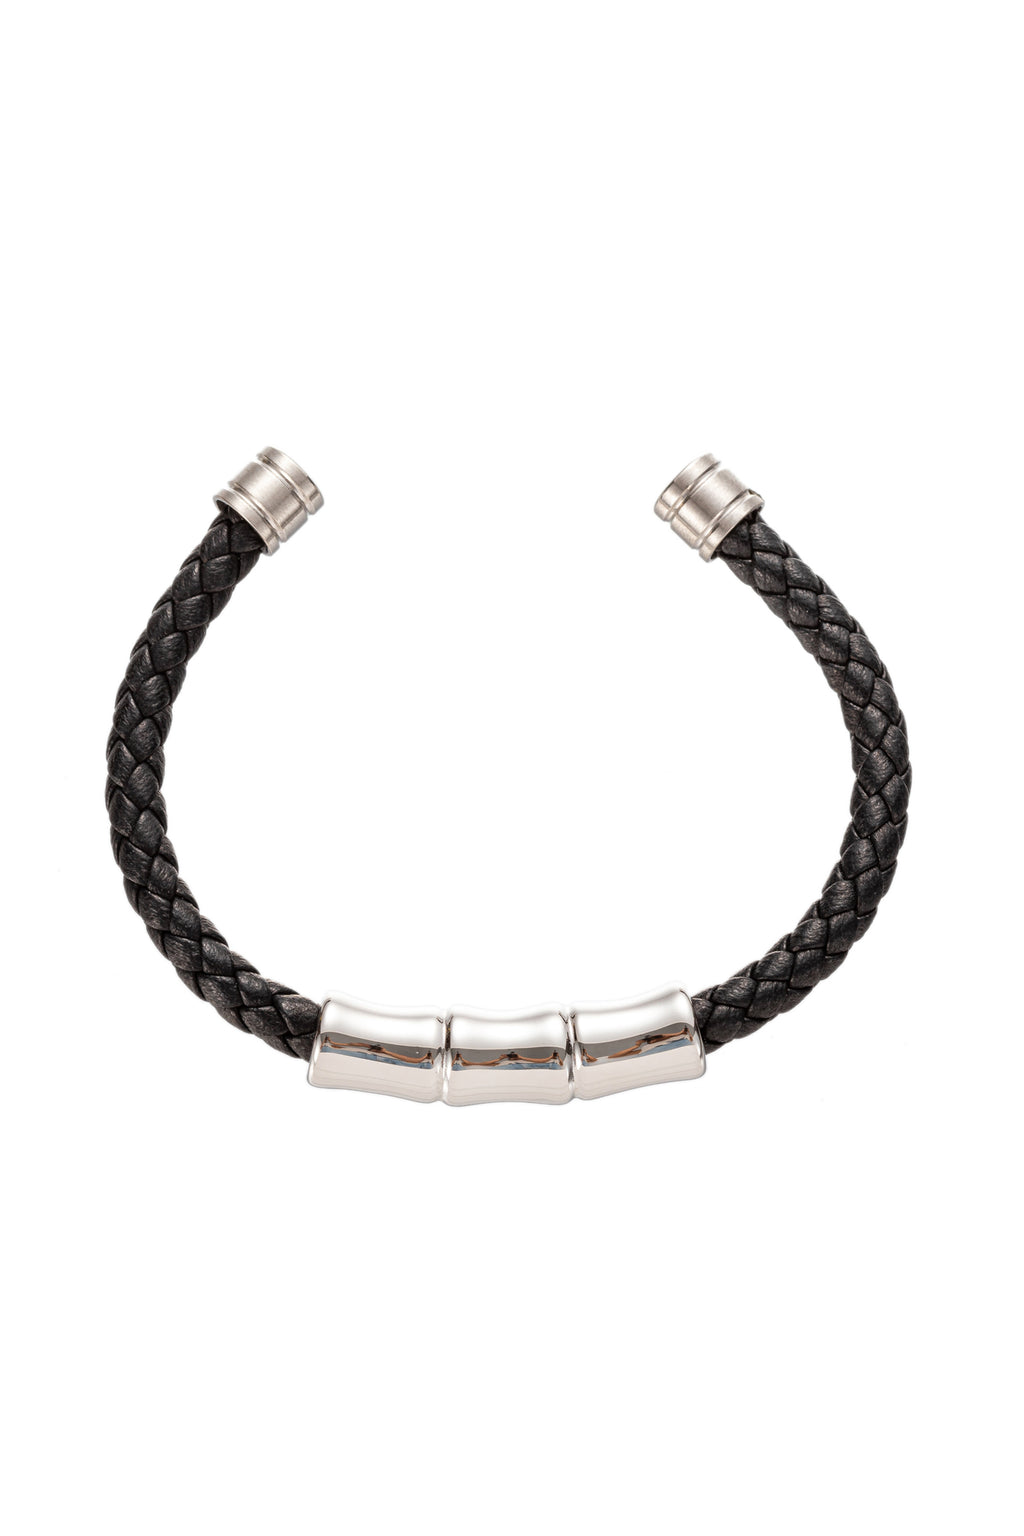 Silver titanium cuff bracelet with authentic leather.